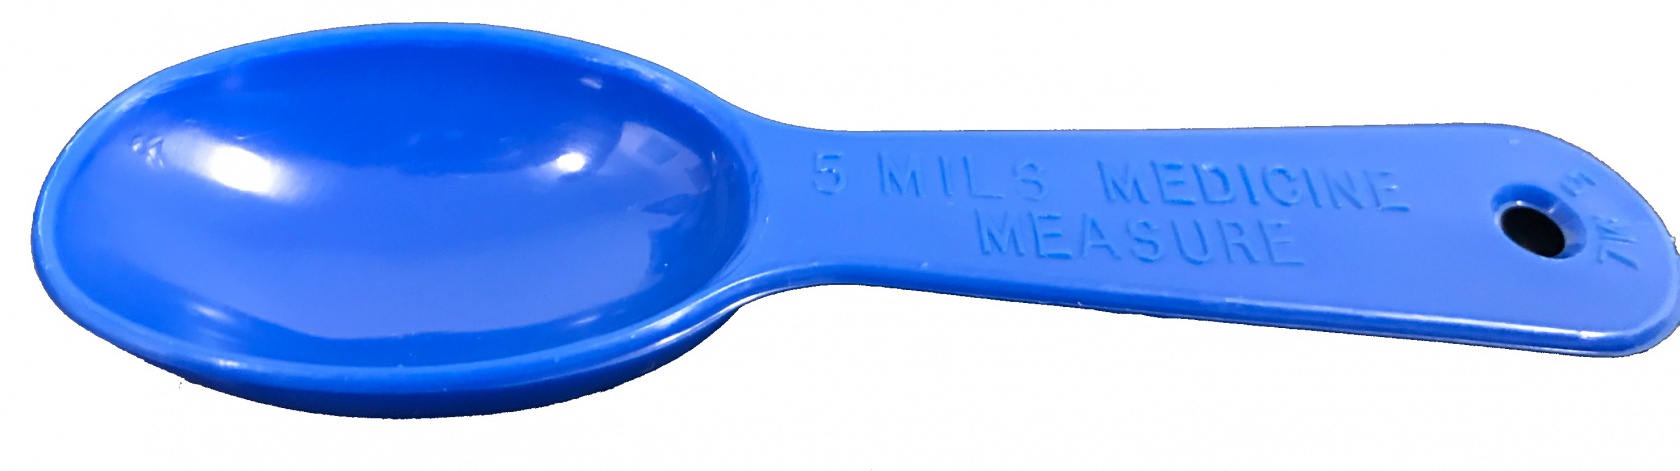 Medicine Spoon Blue 5ml Uropack Rex